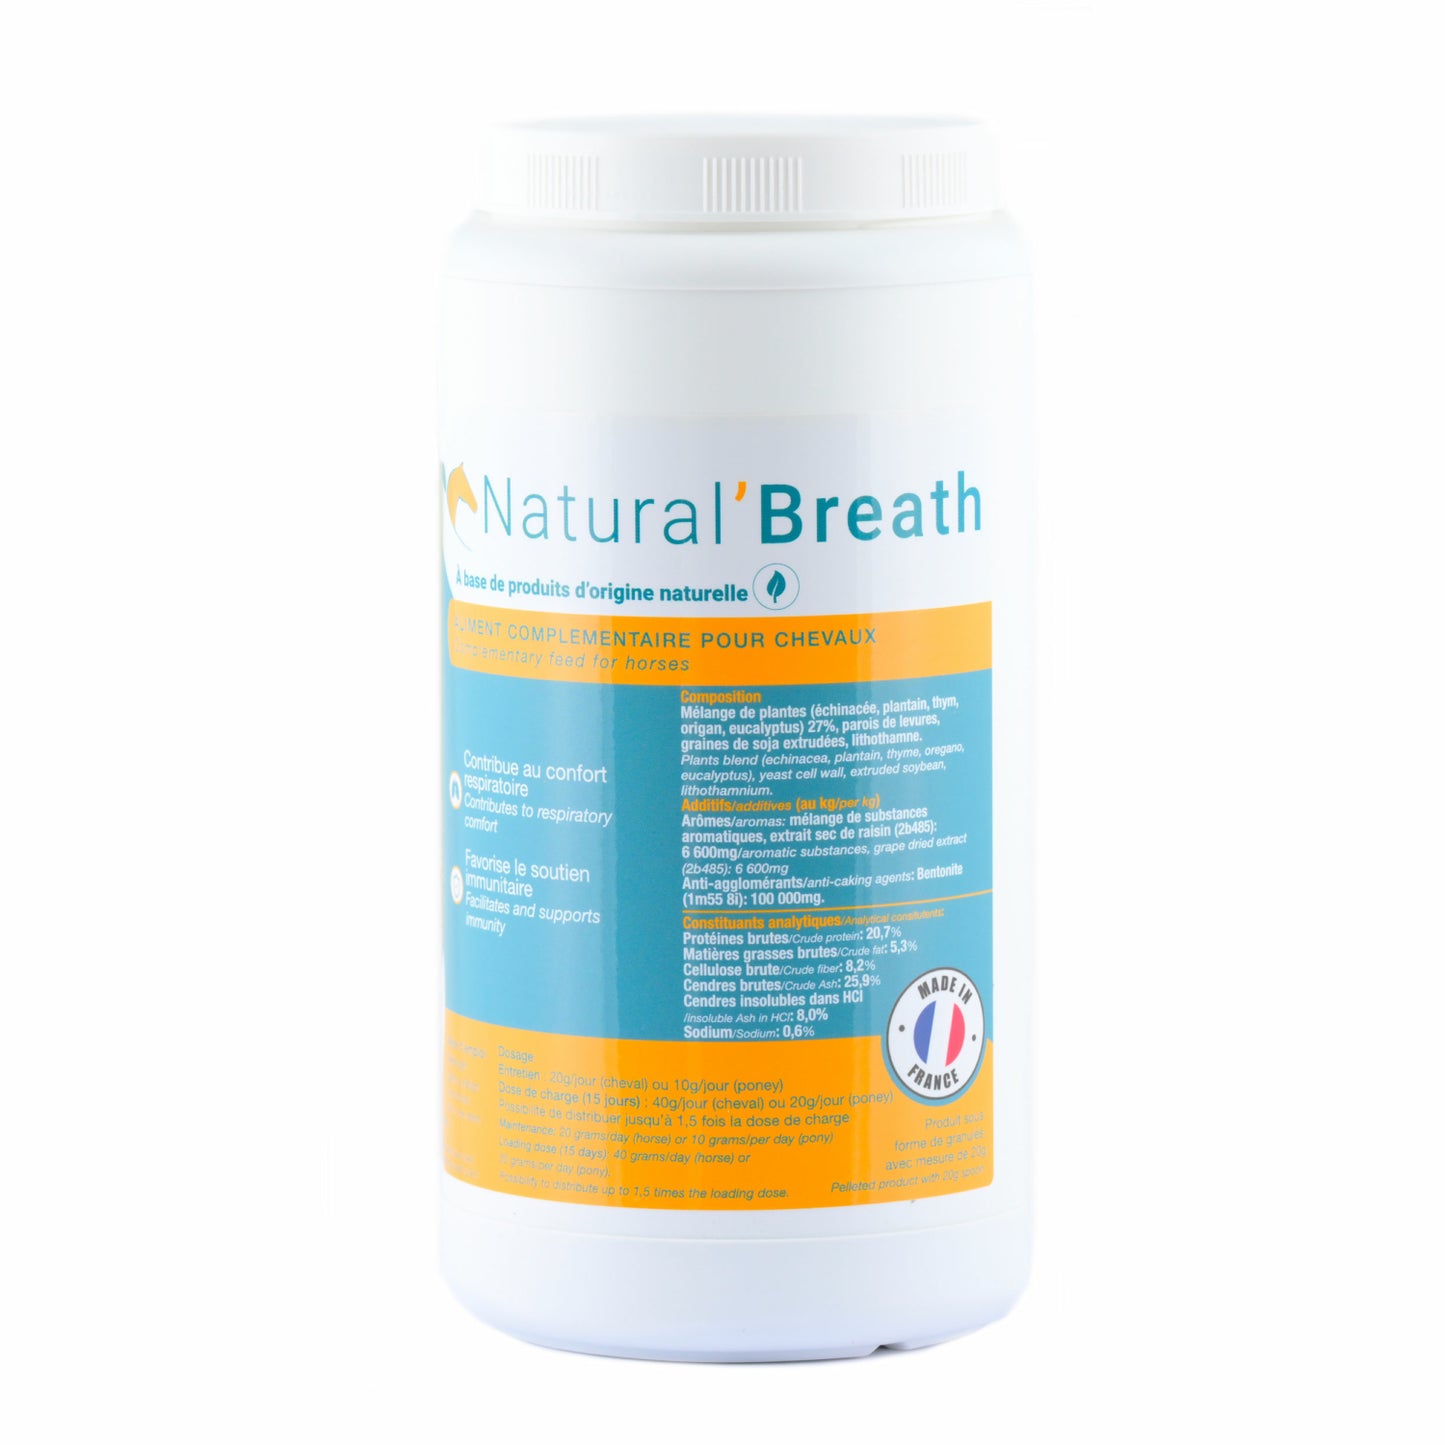 Natural'Breath